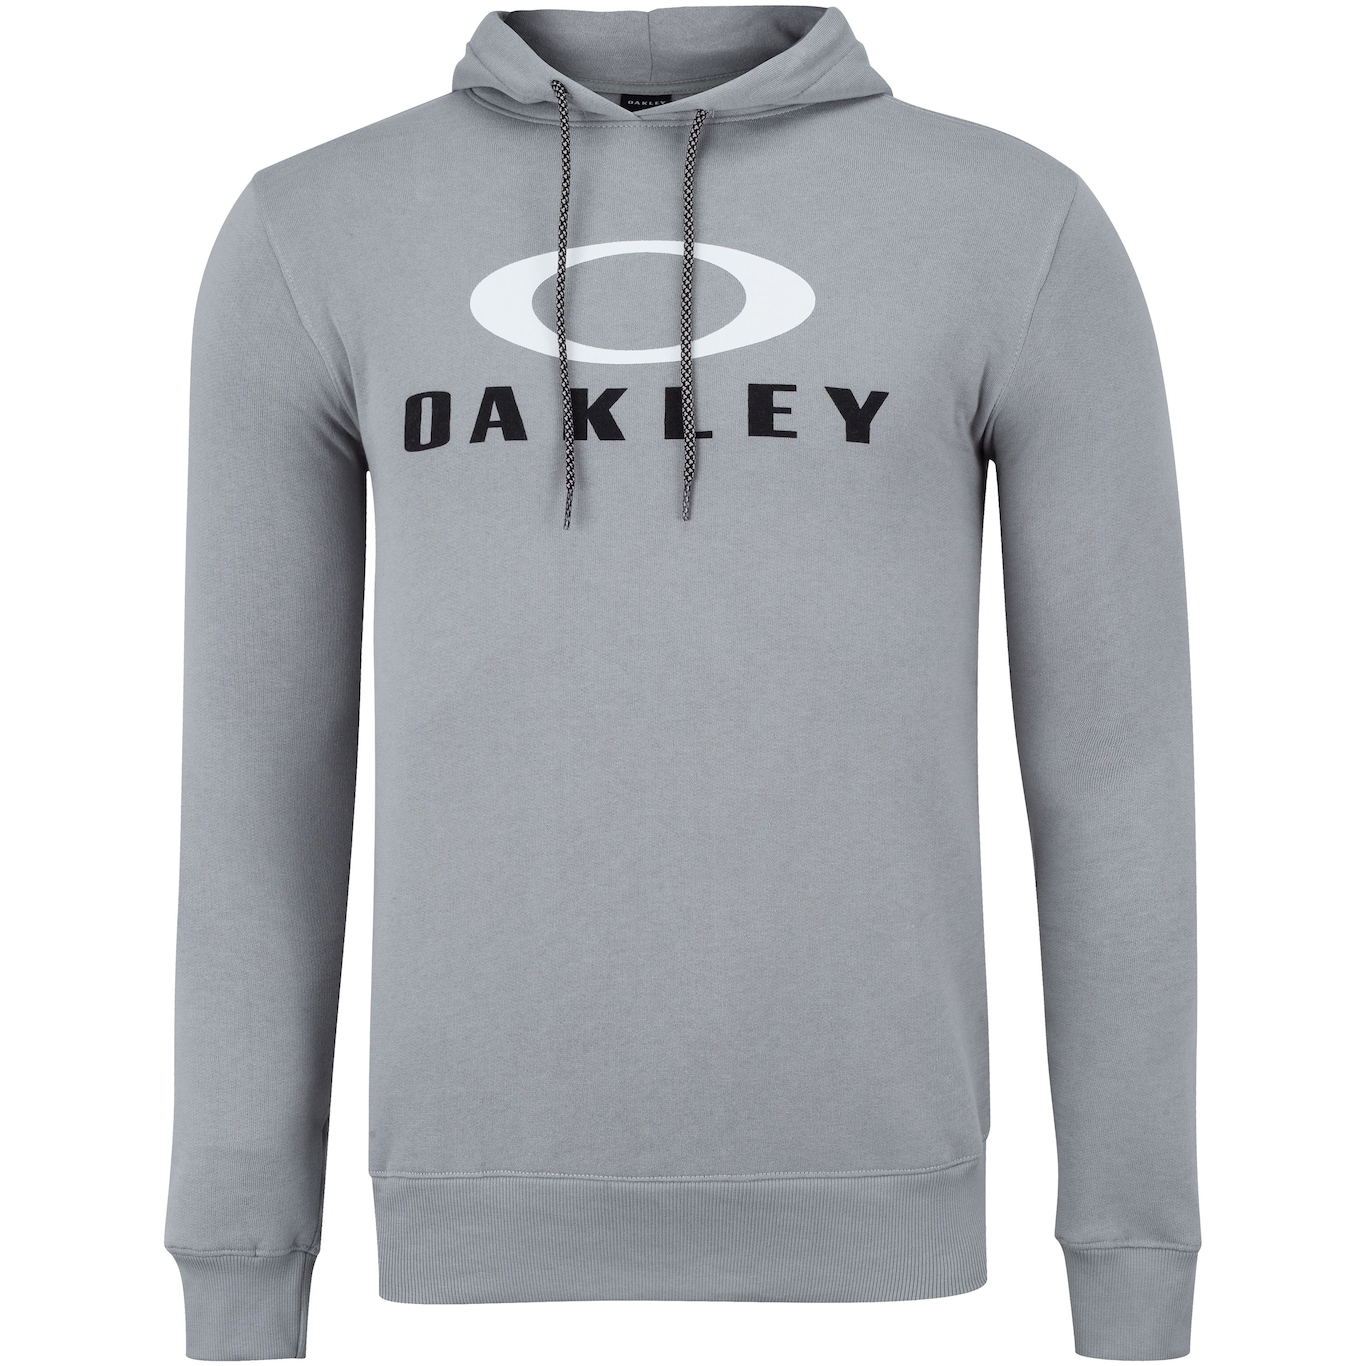 Camiseta Oakley Mark Ii Ls Manga Longa Masculina - Branco, Camisa  Masculina Oakley Nunca Usado 57405742